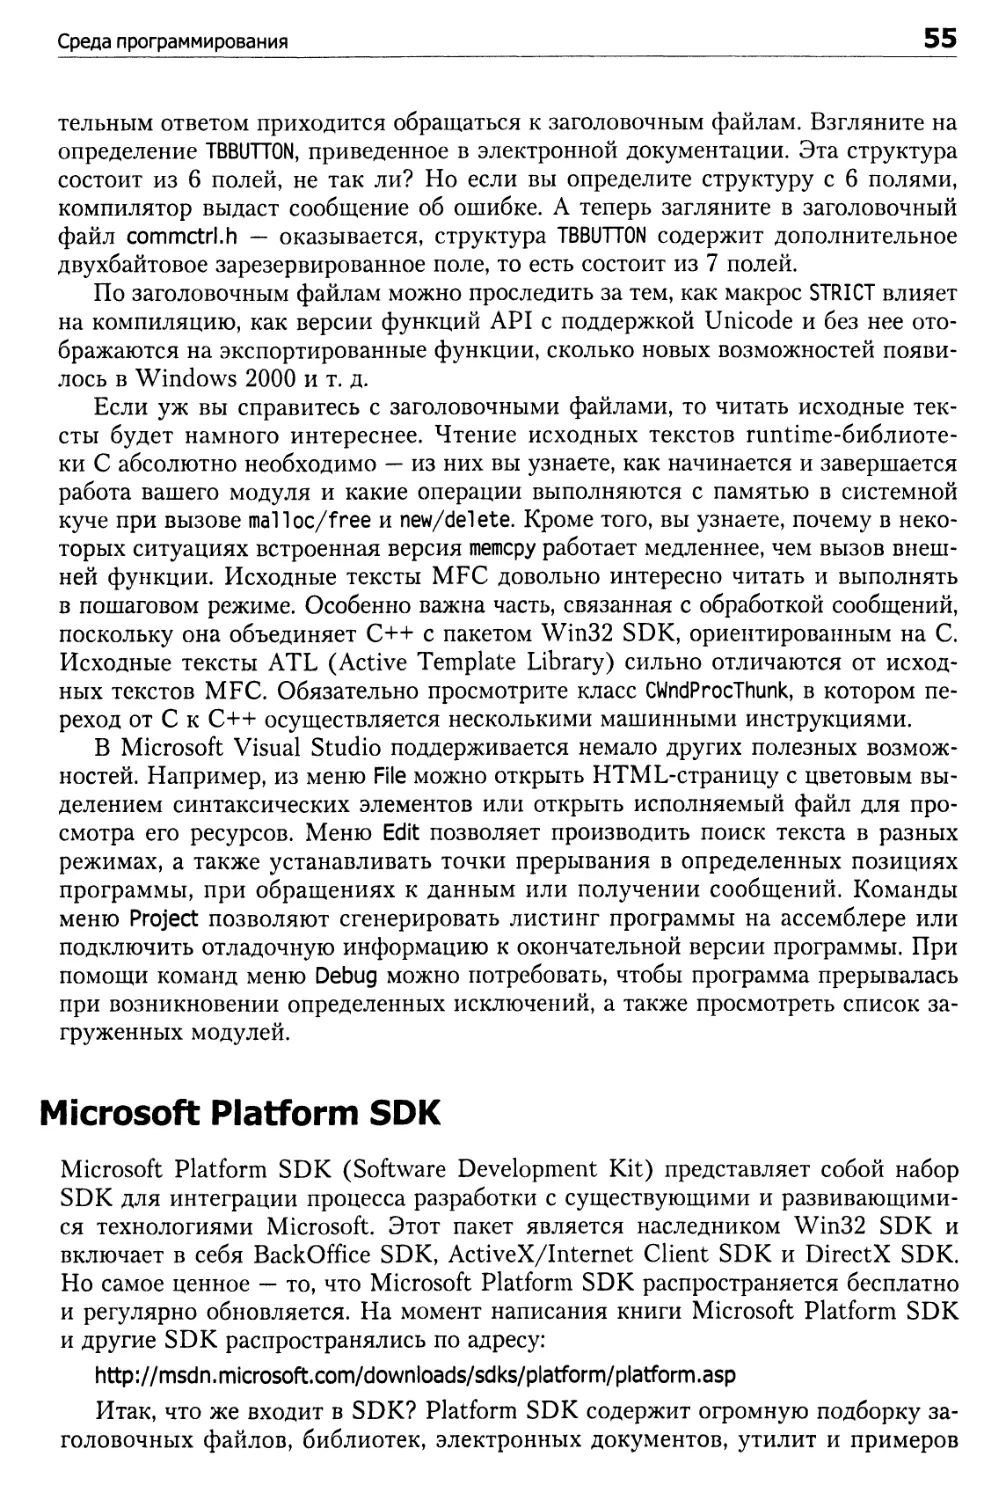 Microsoft Platform SDK